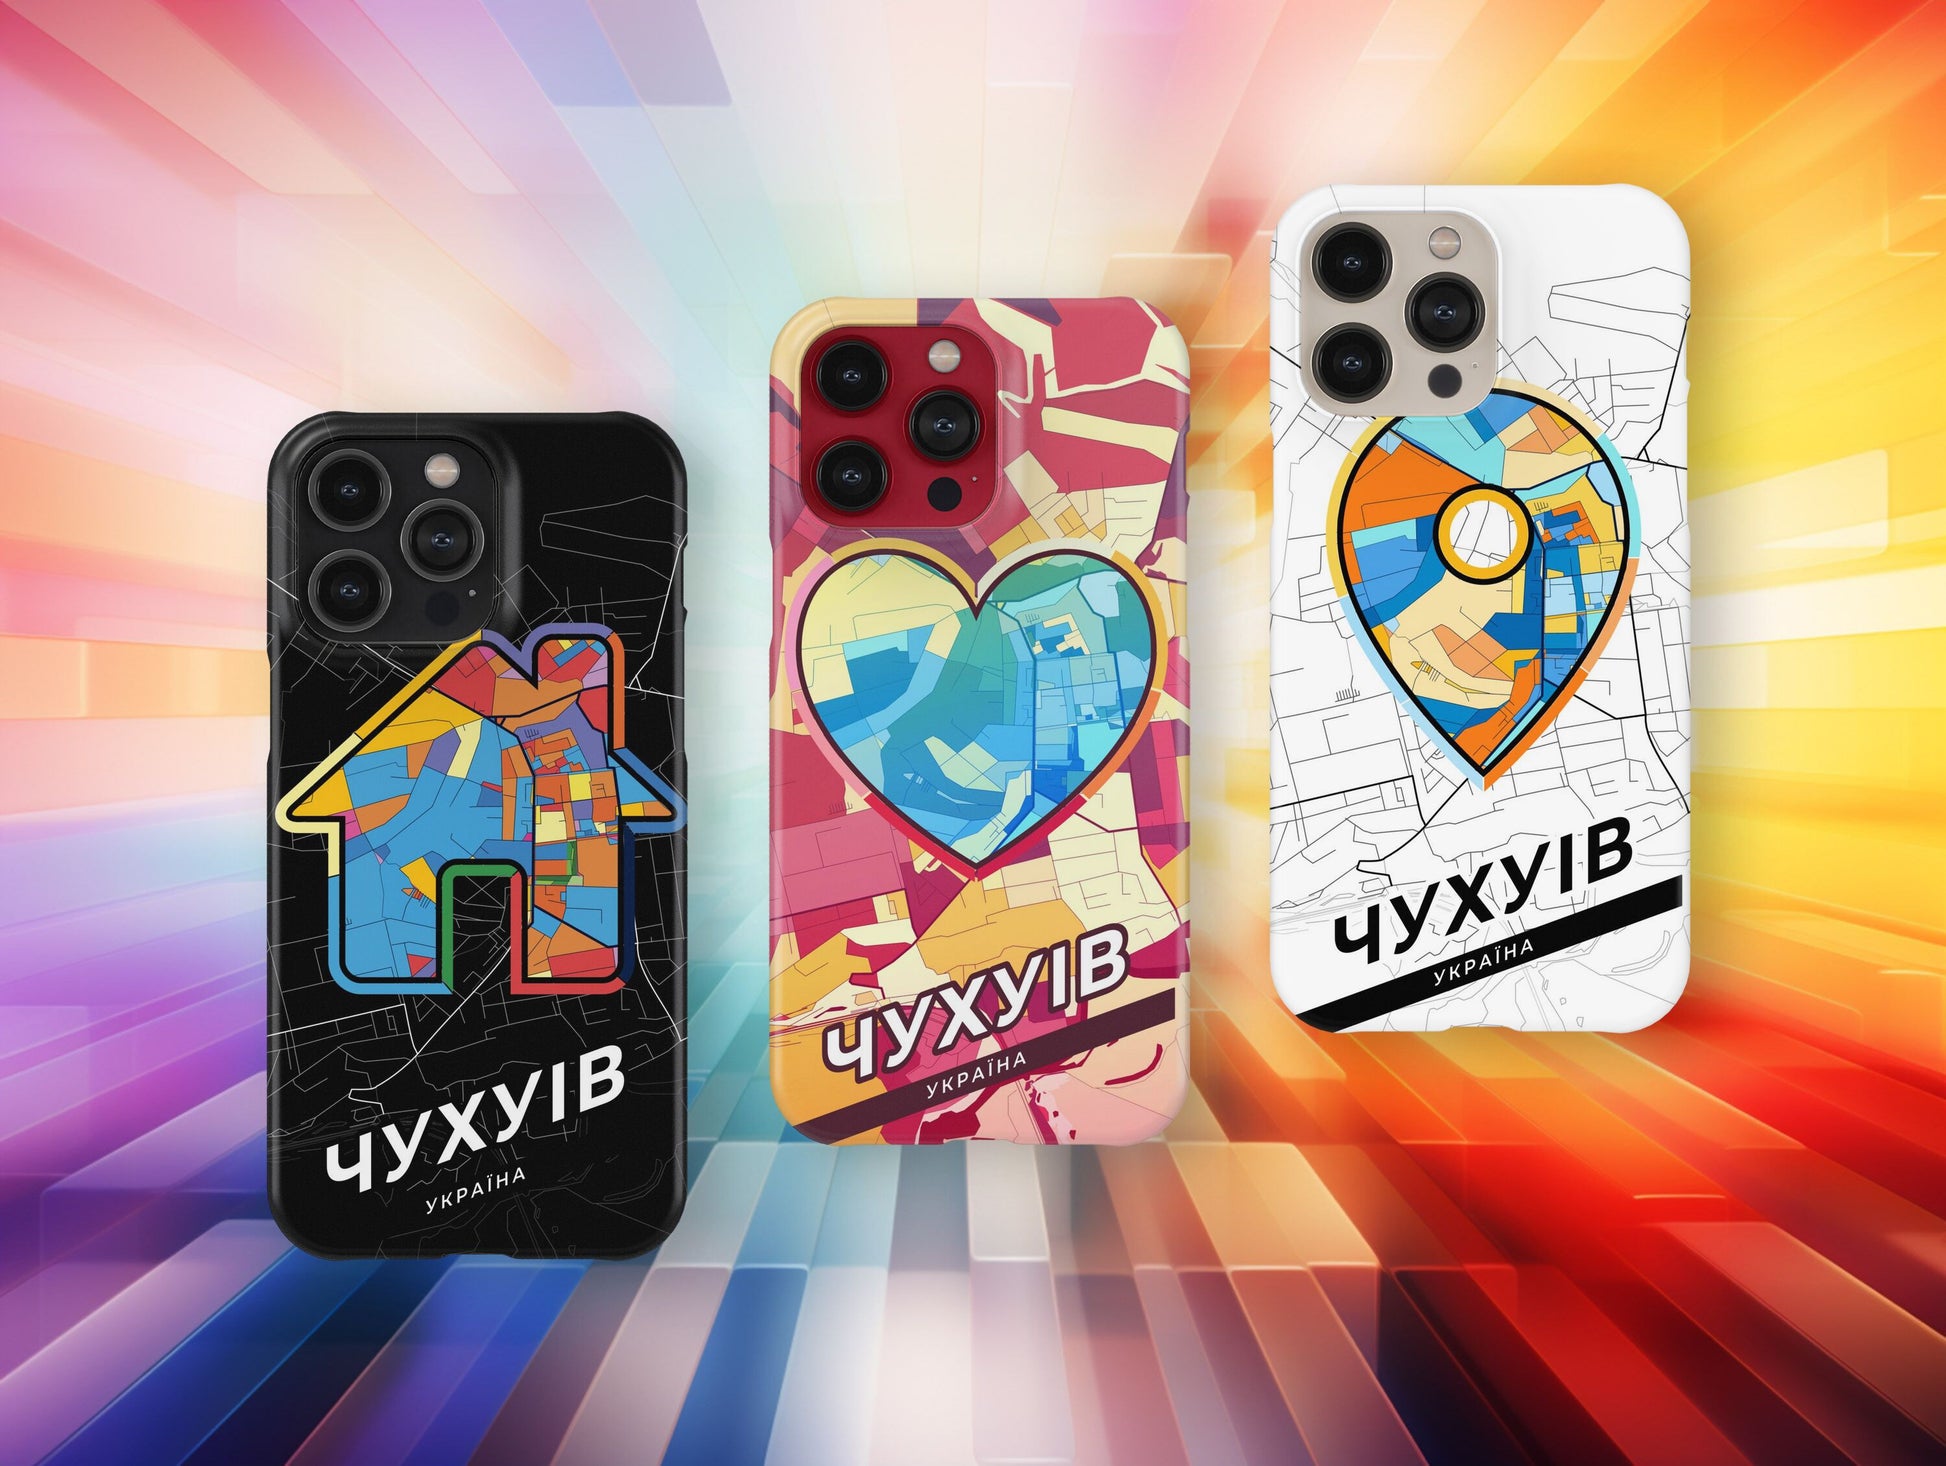 Chuhuiv Ukraine slim phone case with colorful icon. Birthday, wedding or housewarming gift. Couple match cases.